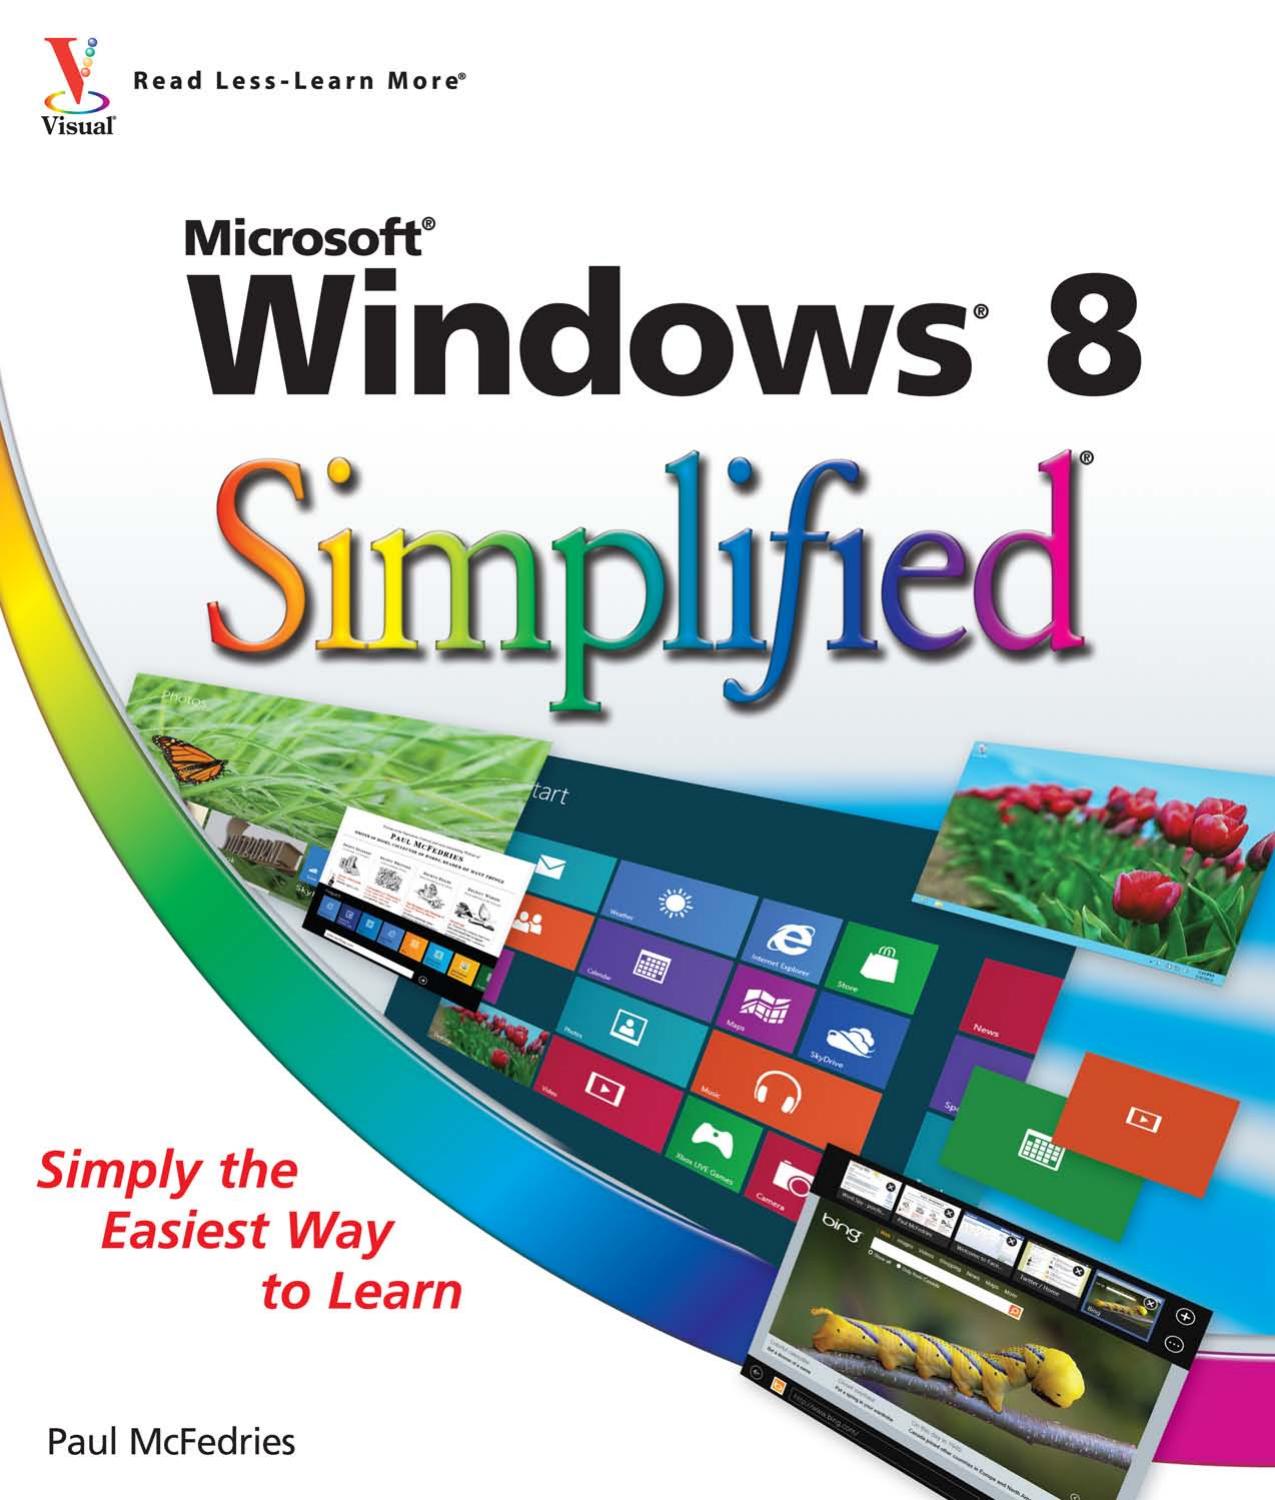 Windows 8 Simplified by Paul McFedries